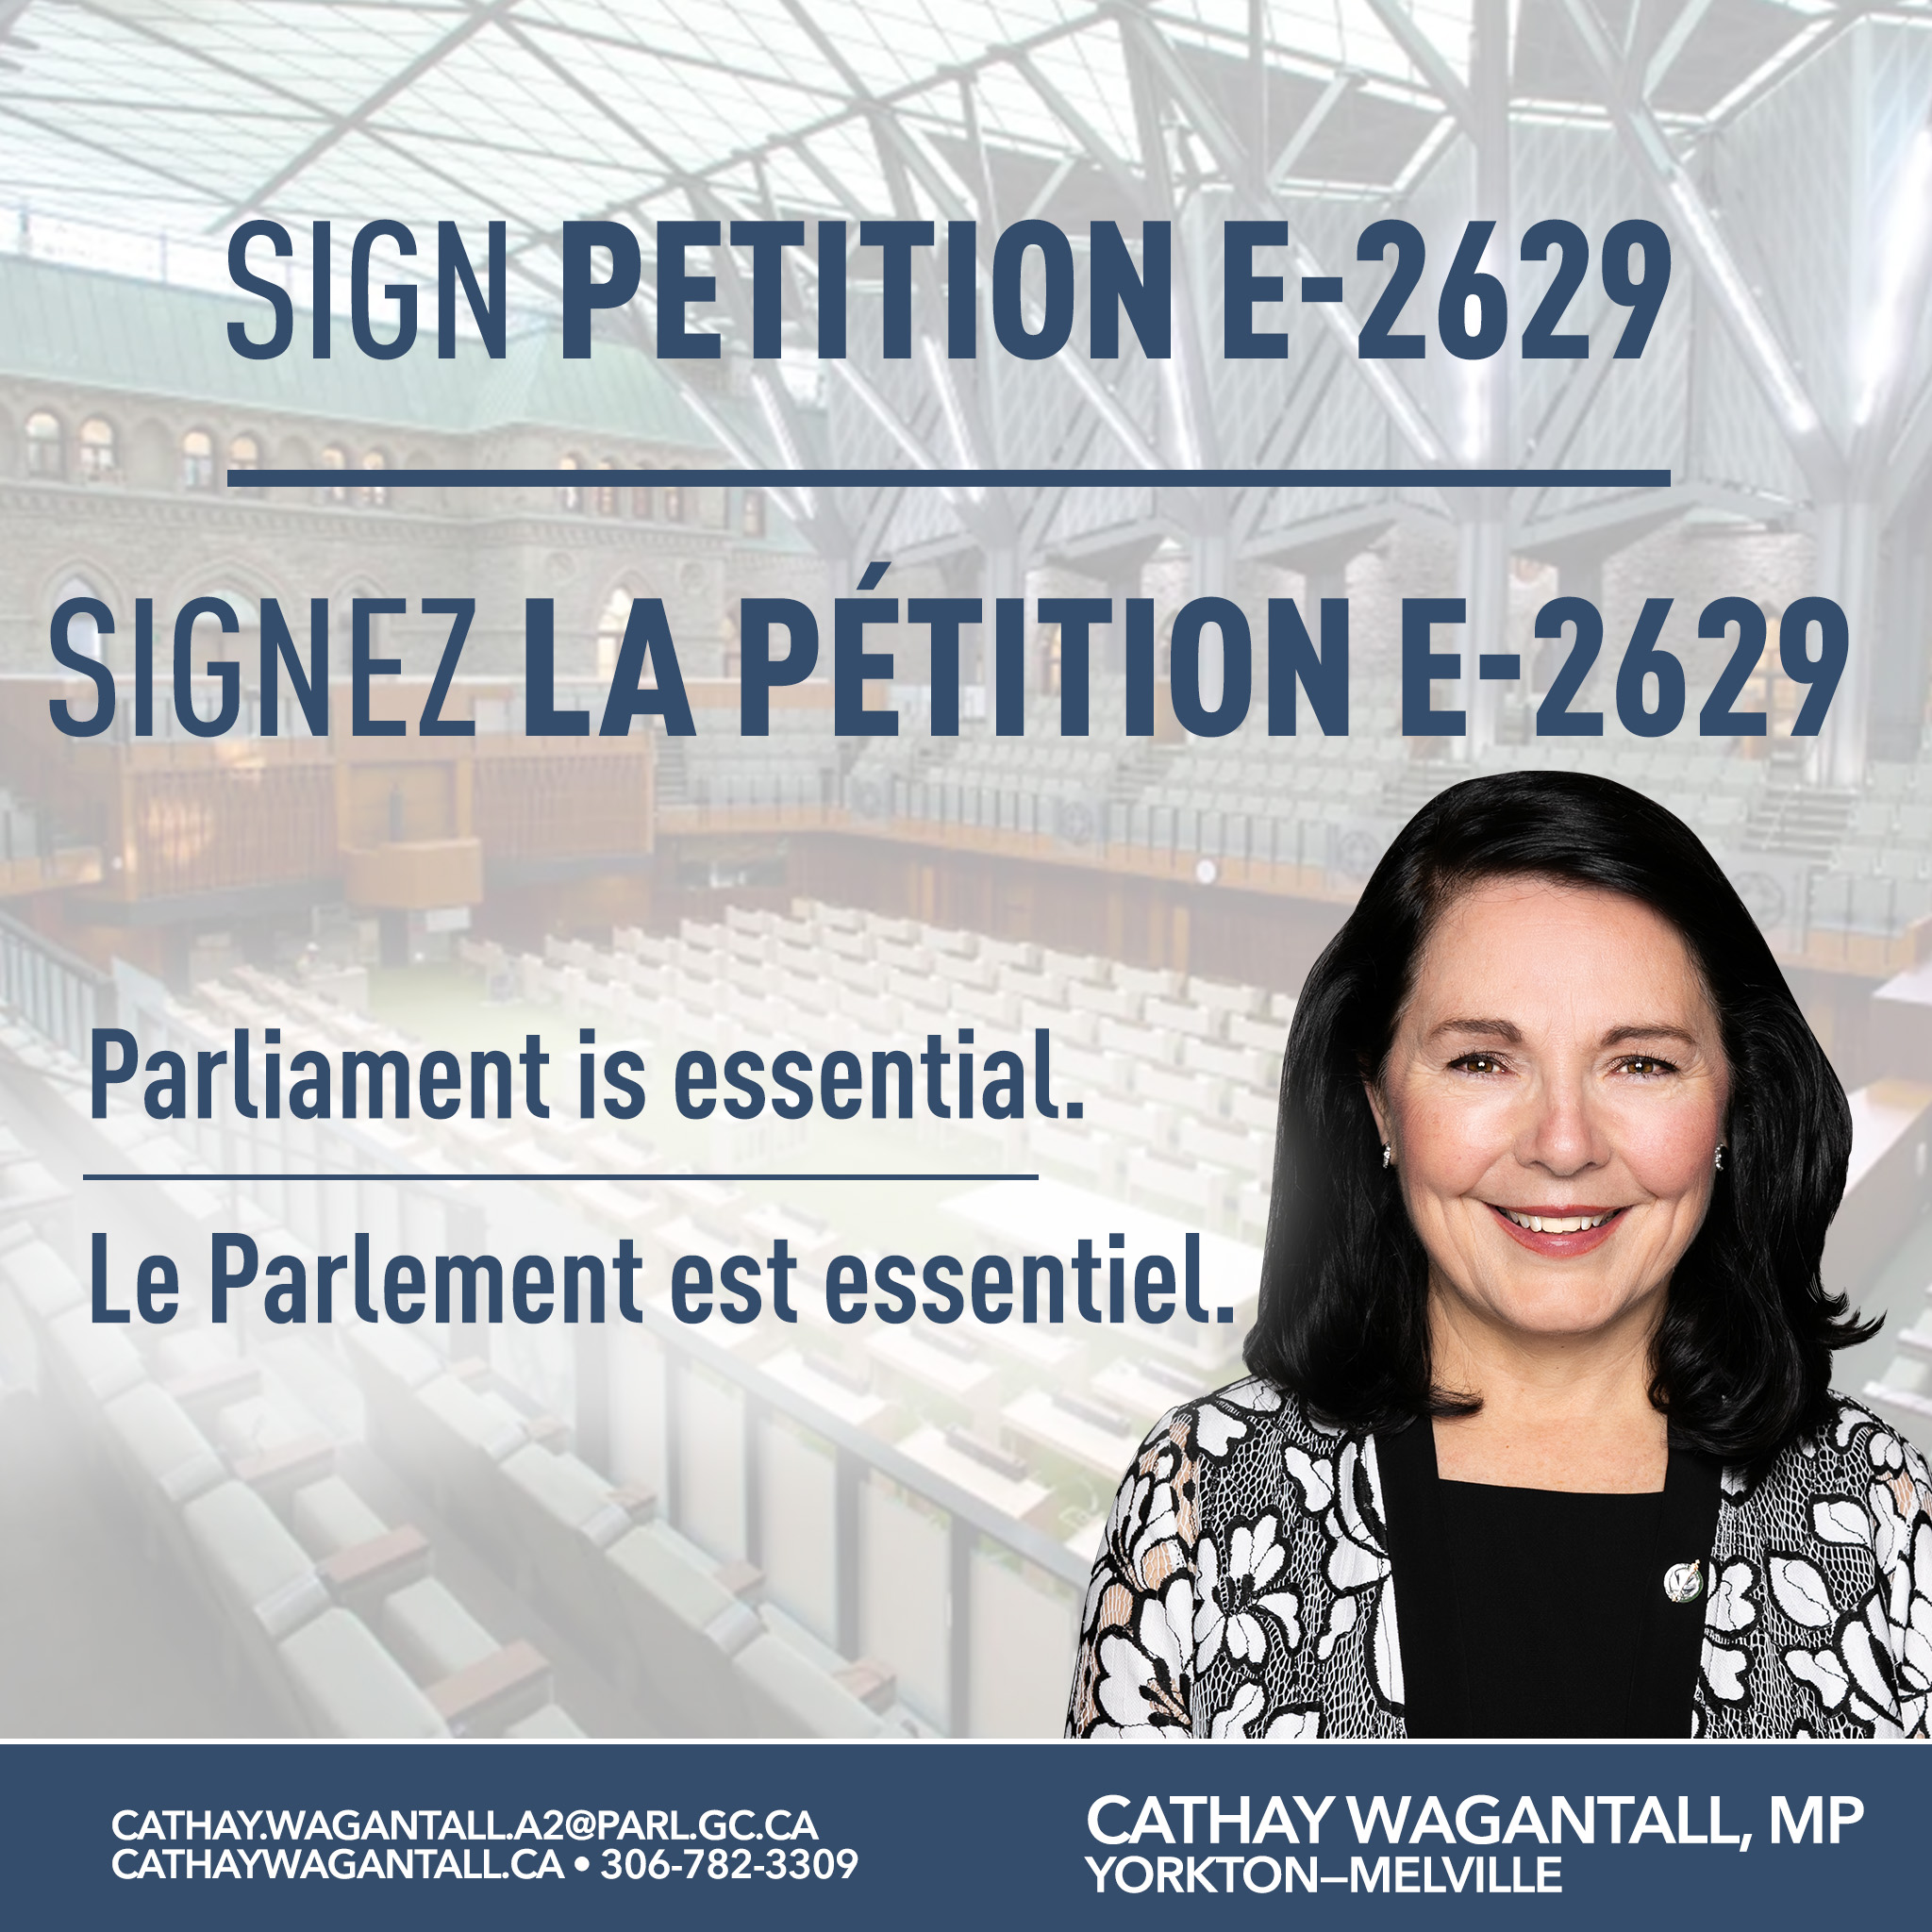 Sign Petition e-2629 and Bring Pariliament Back